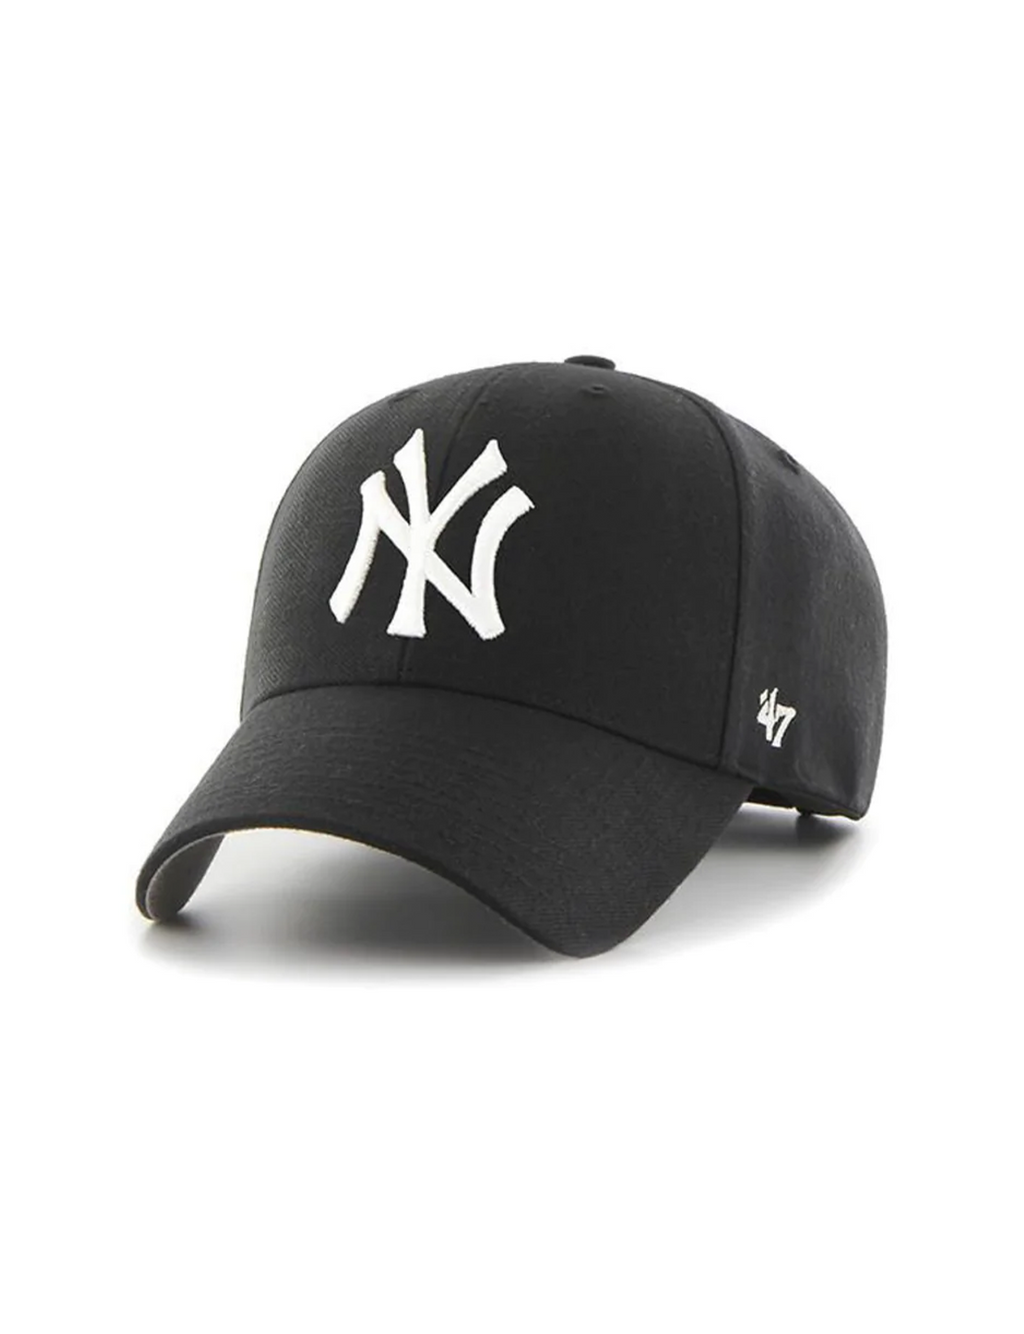 NY Yankees MVP Ball Cap, Black/White